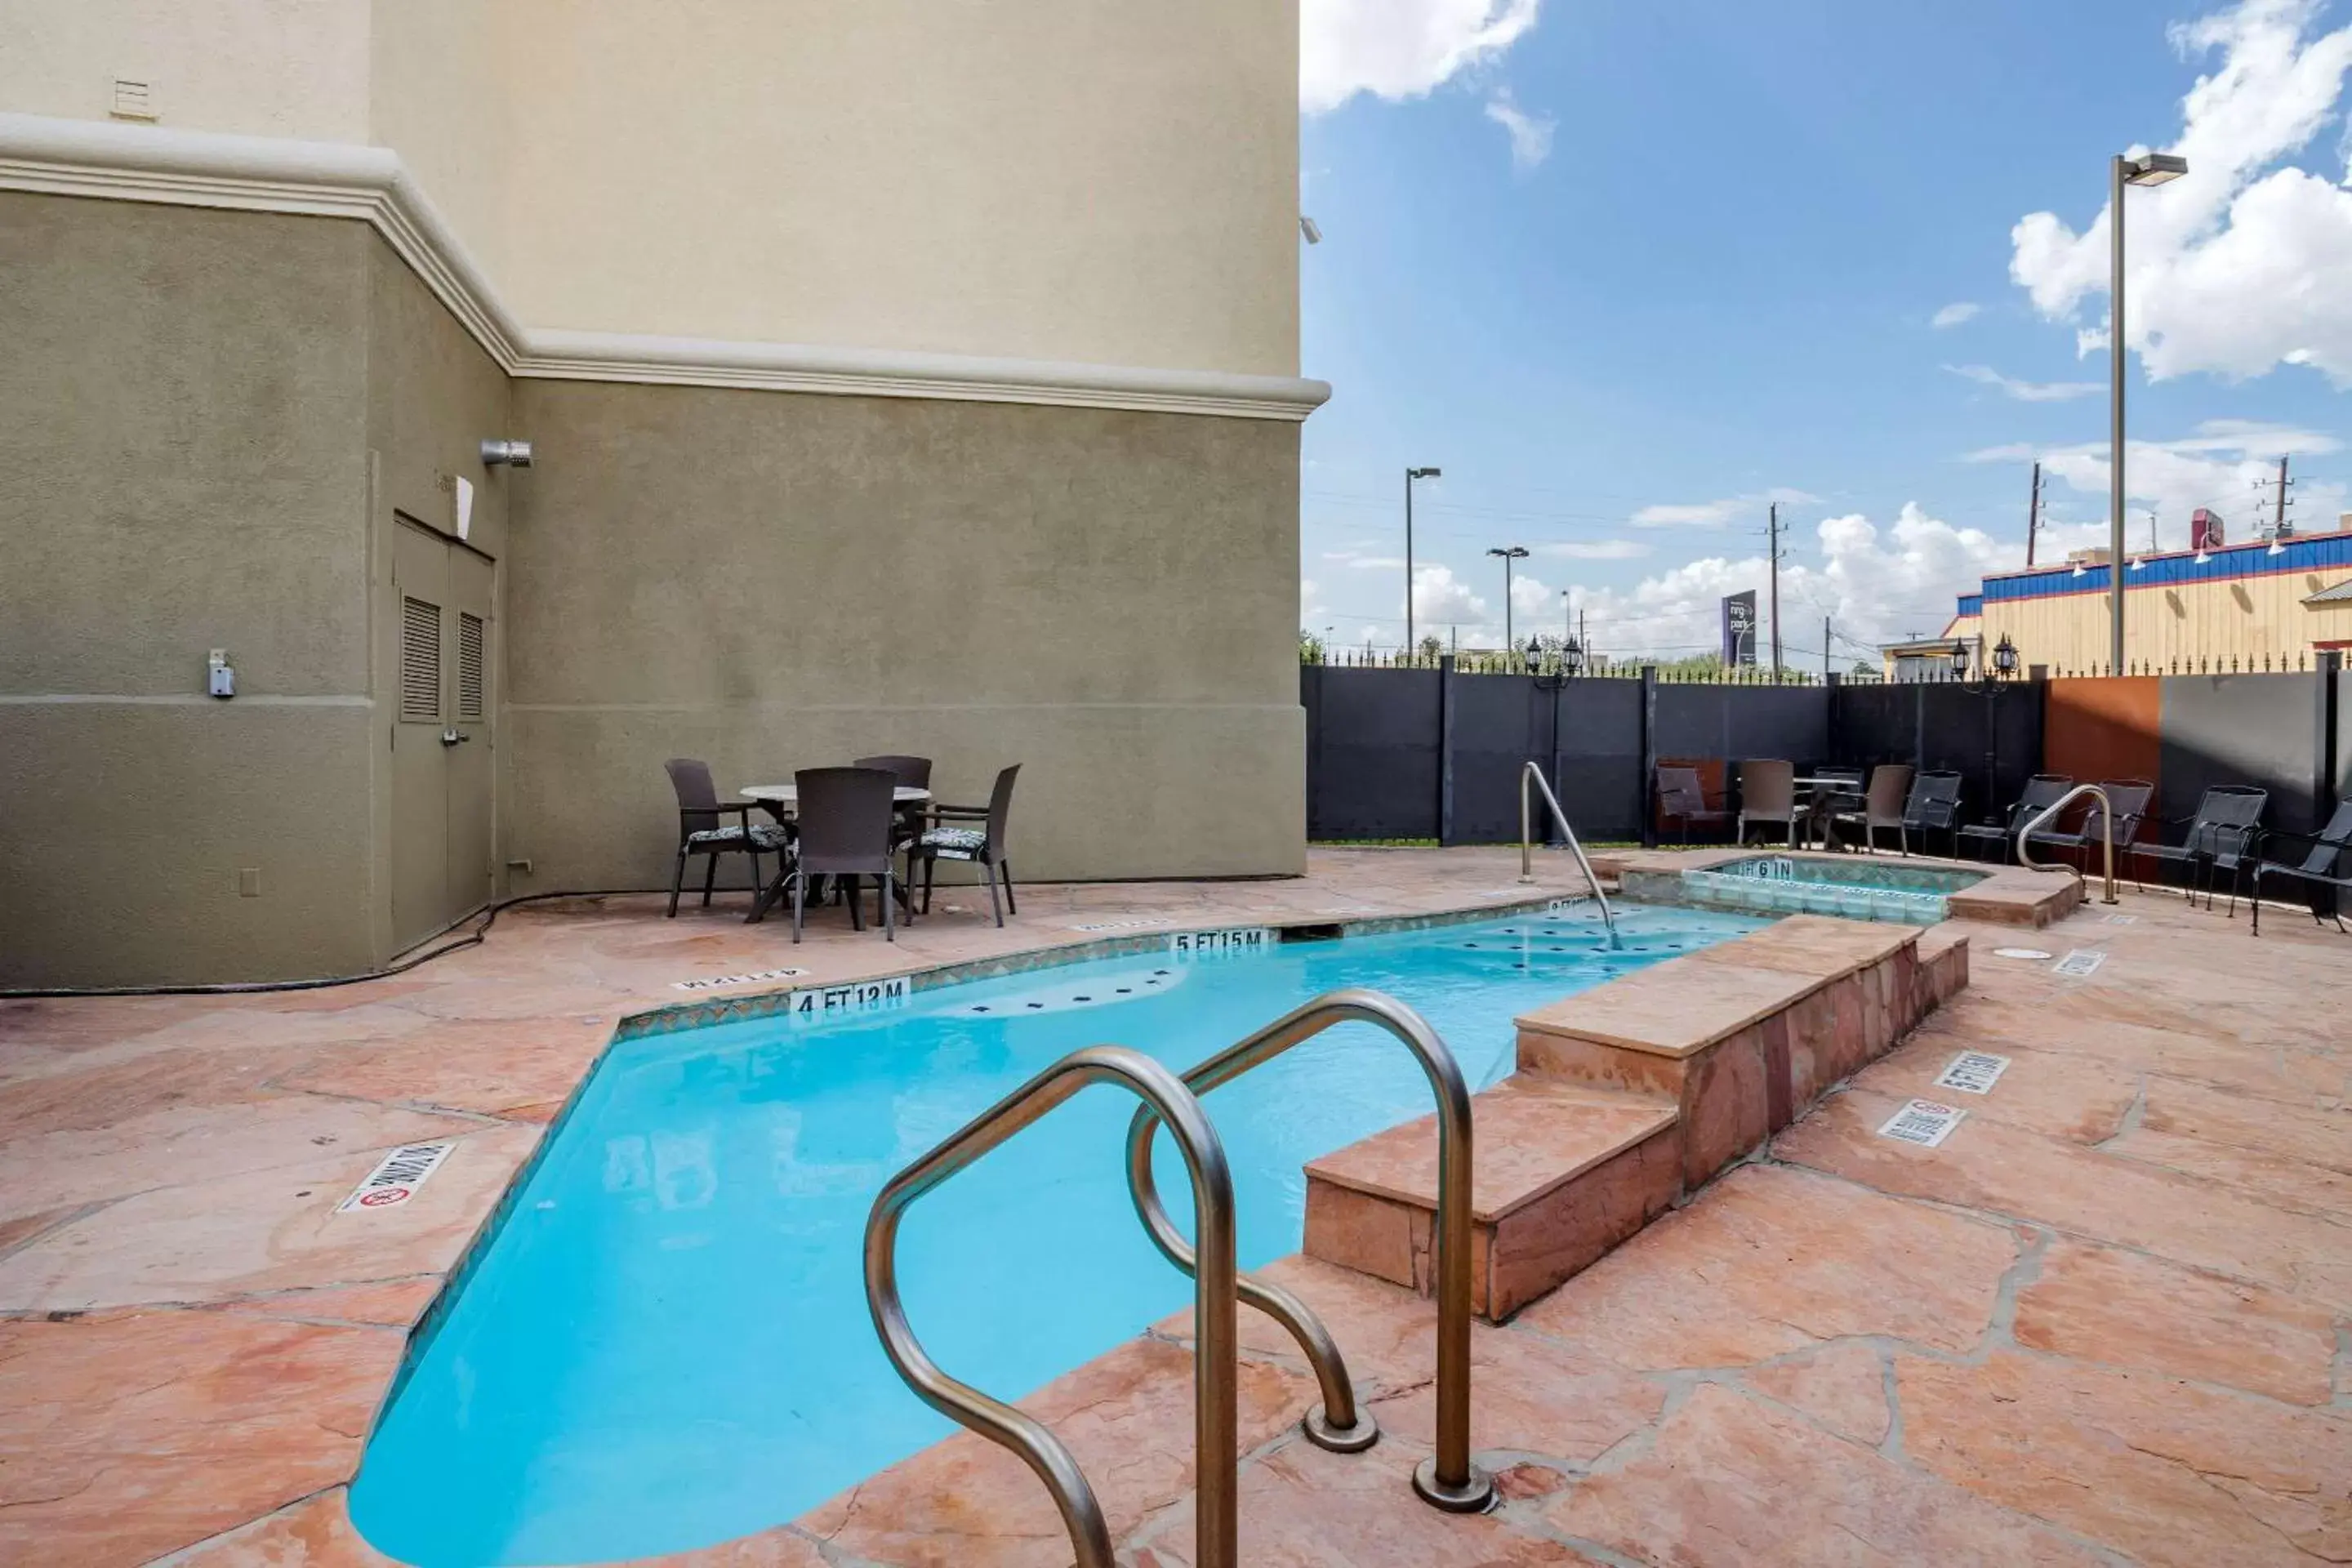 Swimming Pool in Comfort Suites near Texas Medical Center - NRG Stadium